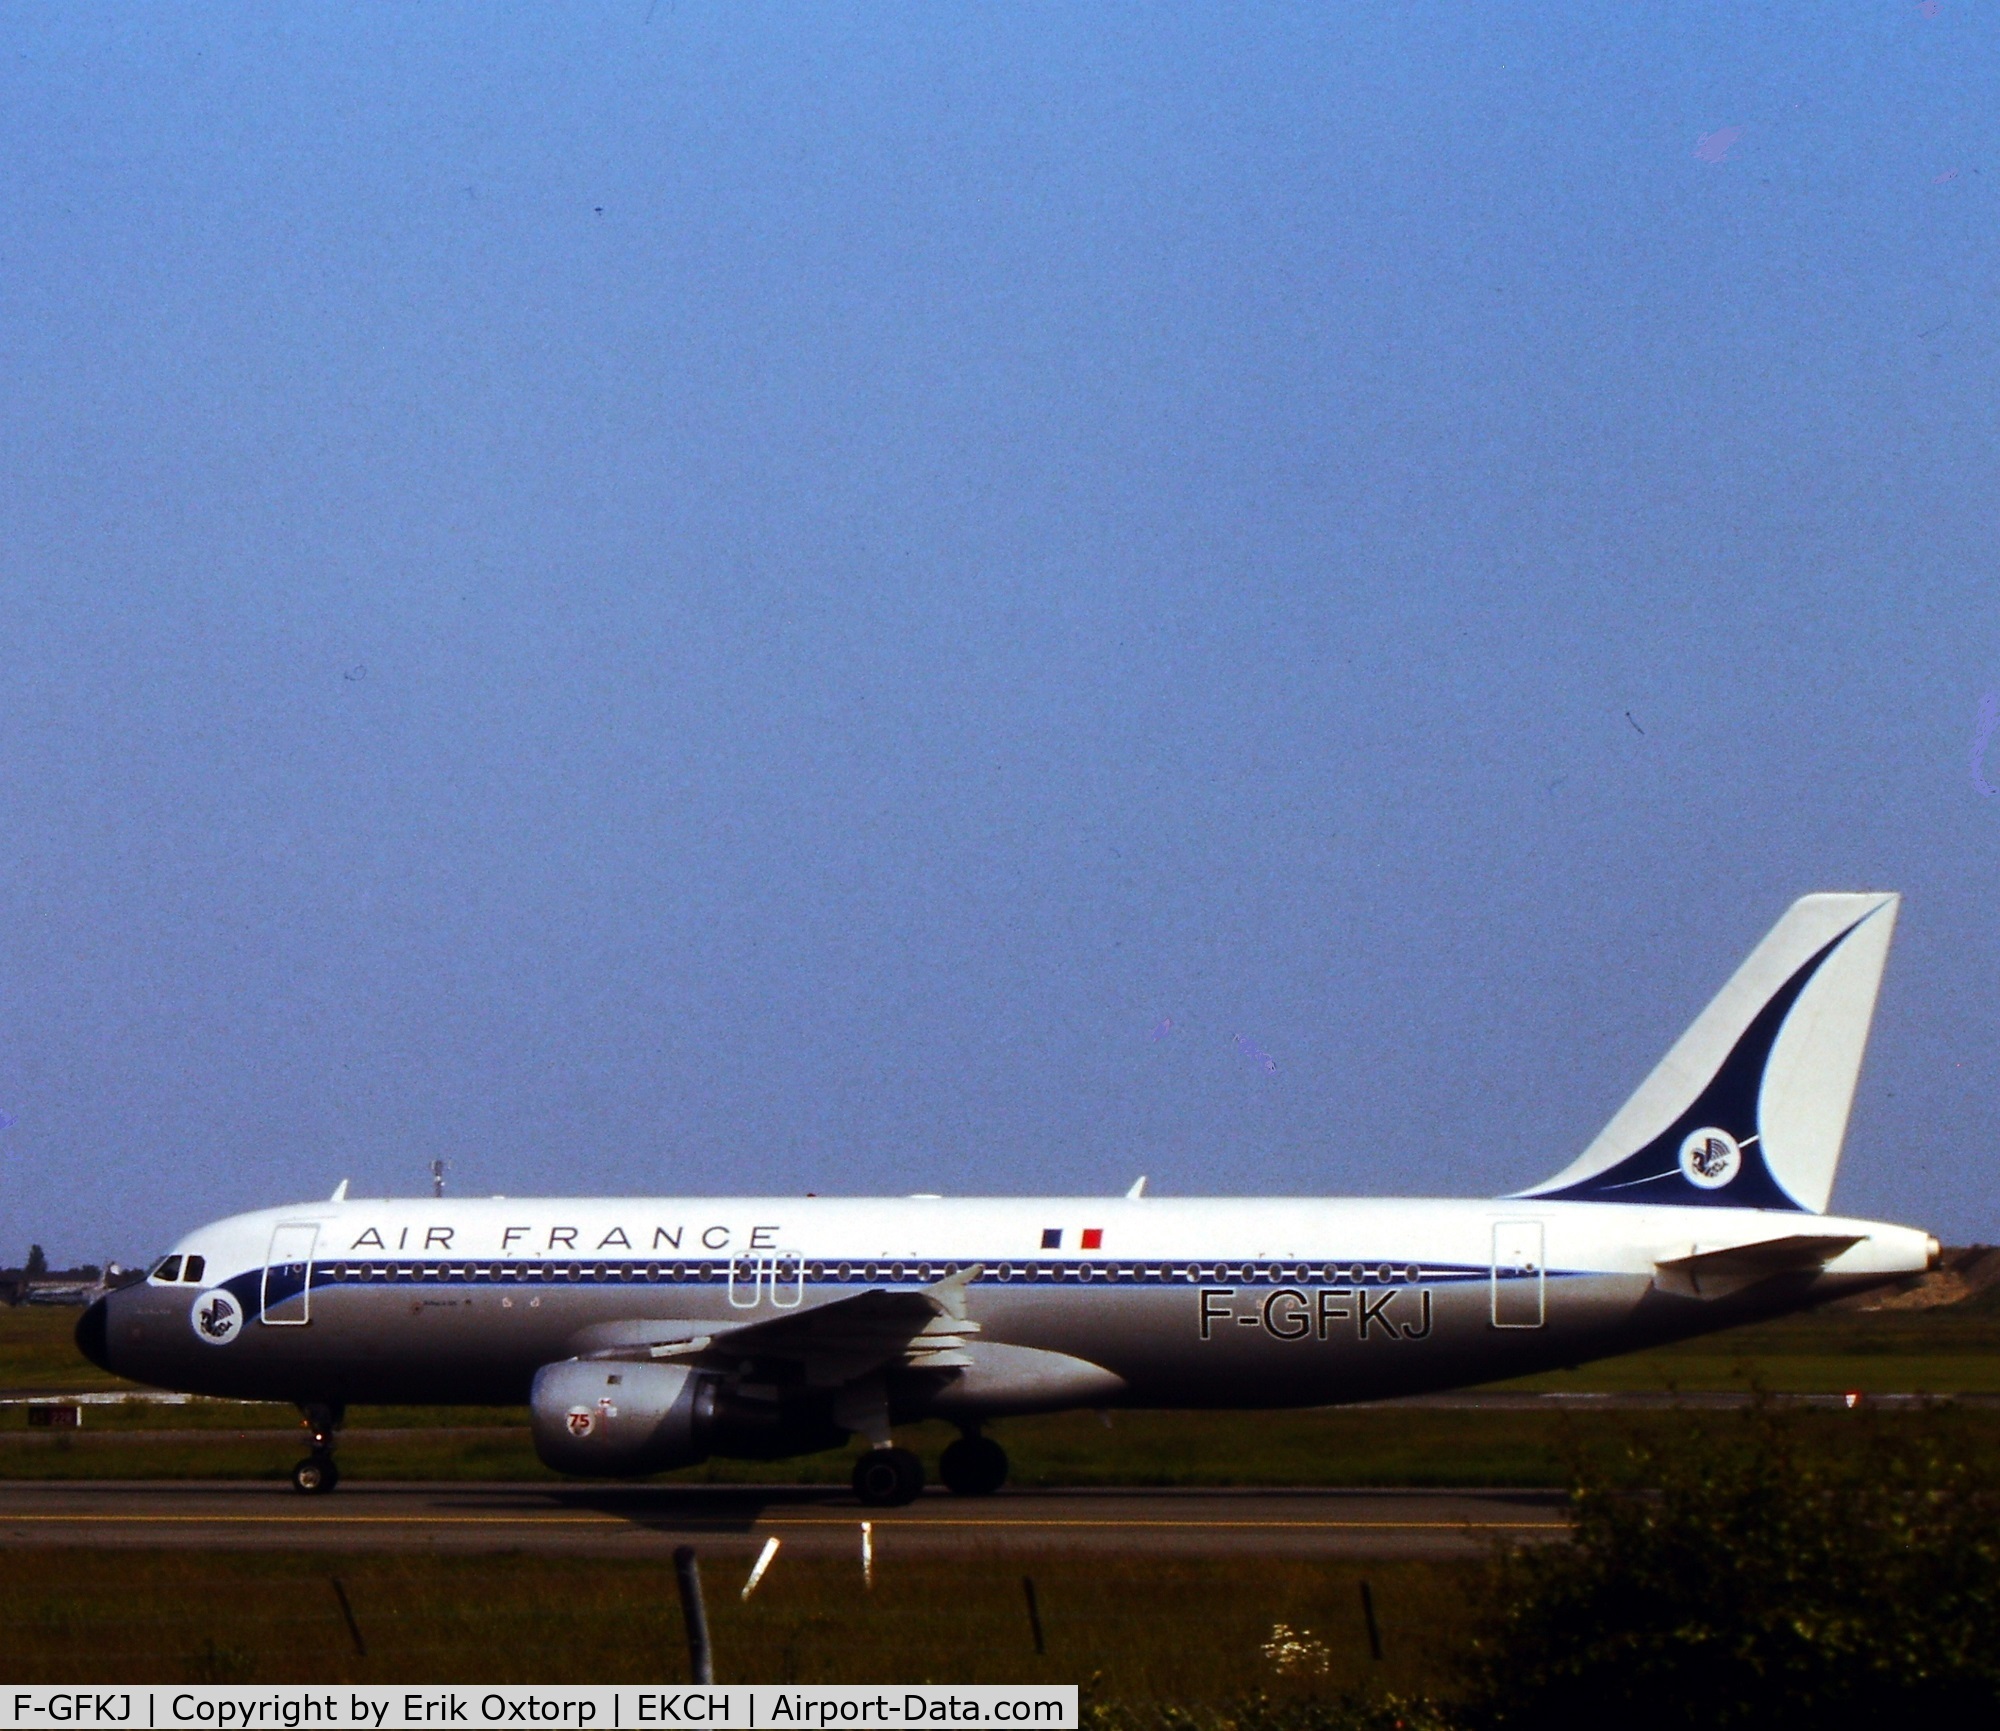 F-GFKJ, 1989 Airbus A320-211 C/N 0063, F-GFKJ landed rw 04L